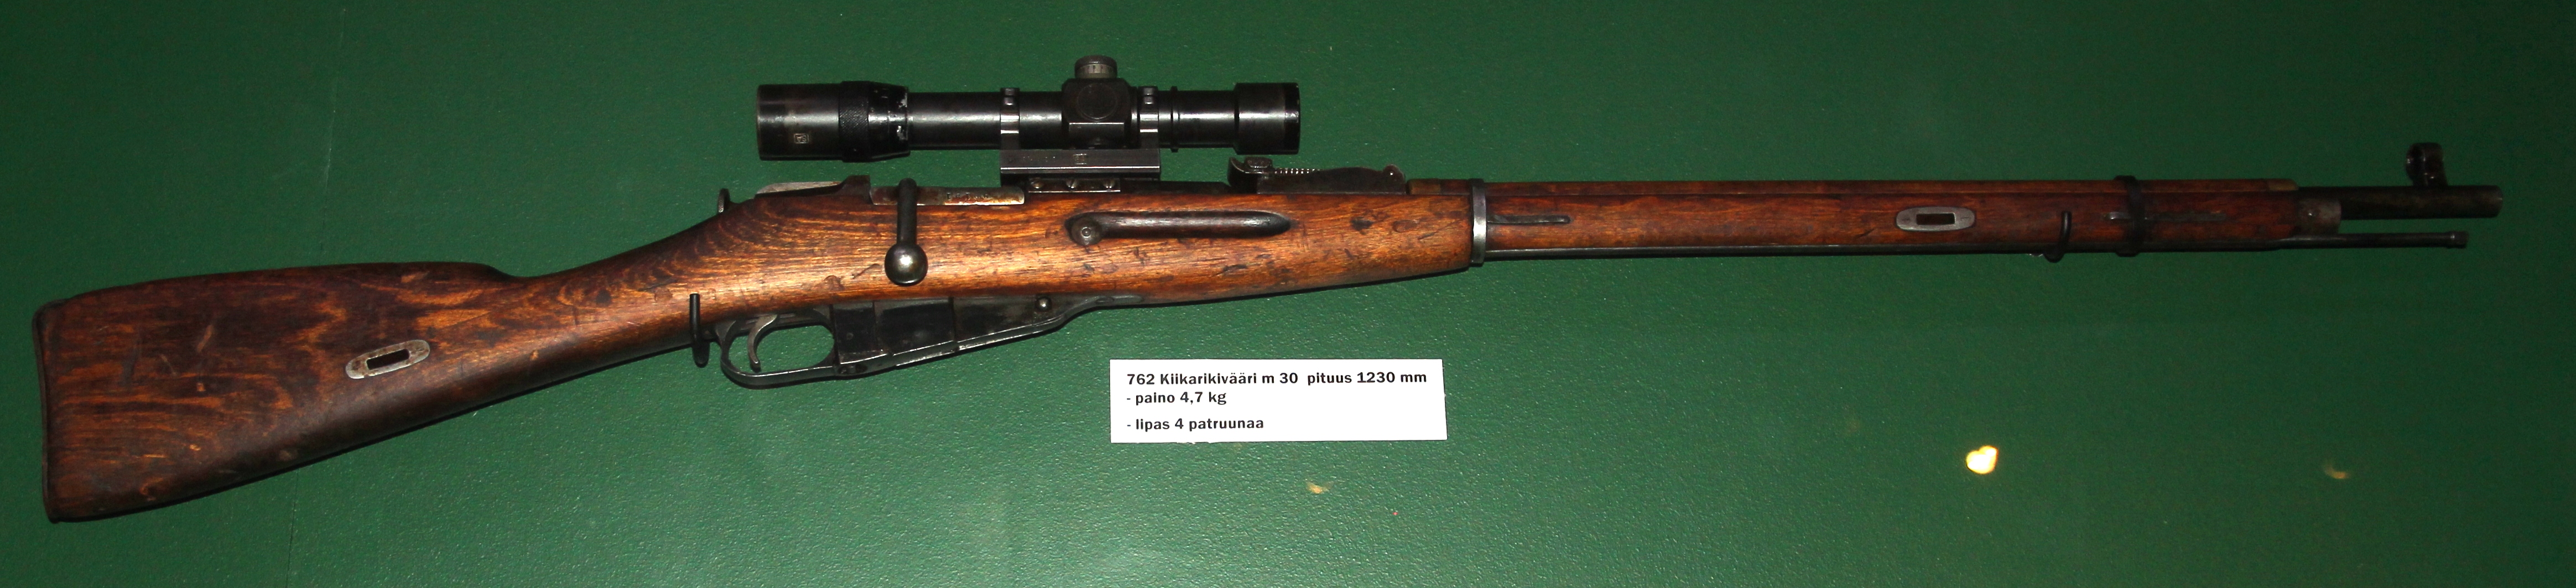 Mosin Nagant M91 30 Rifle #23